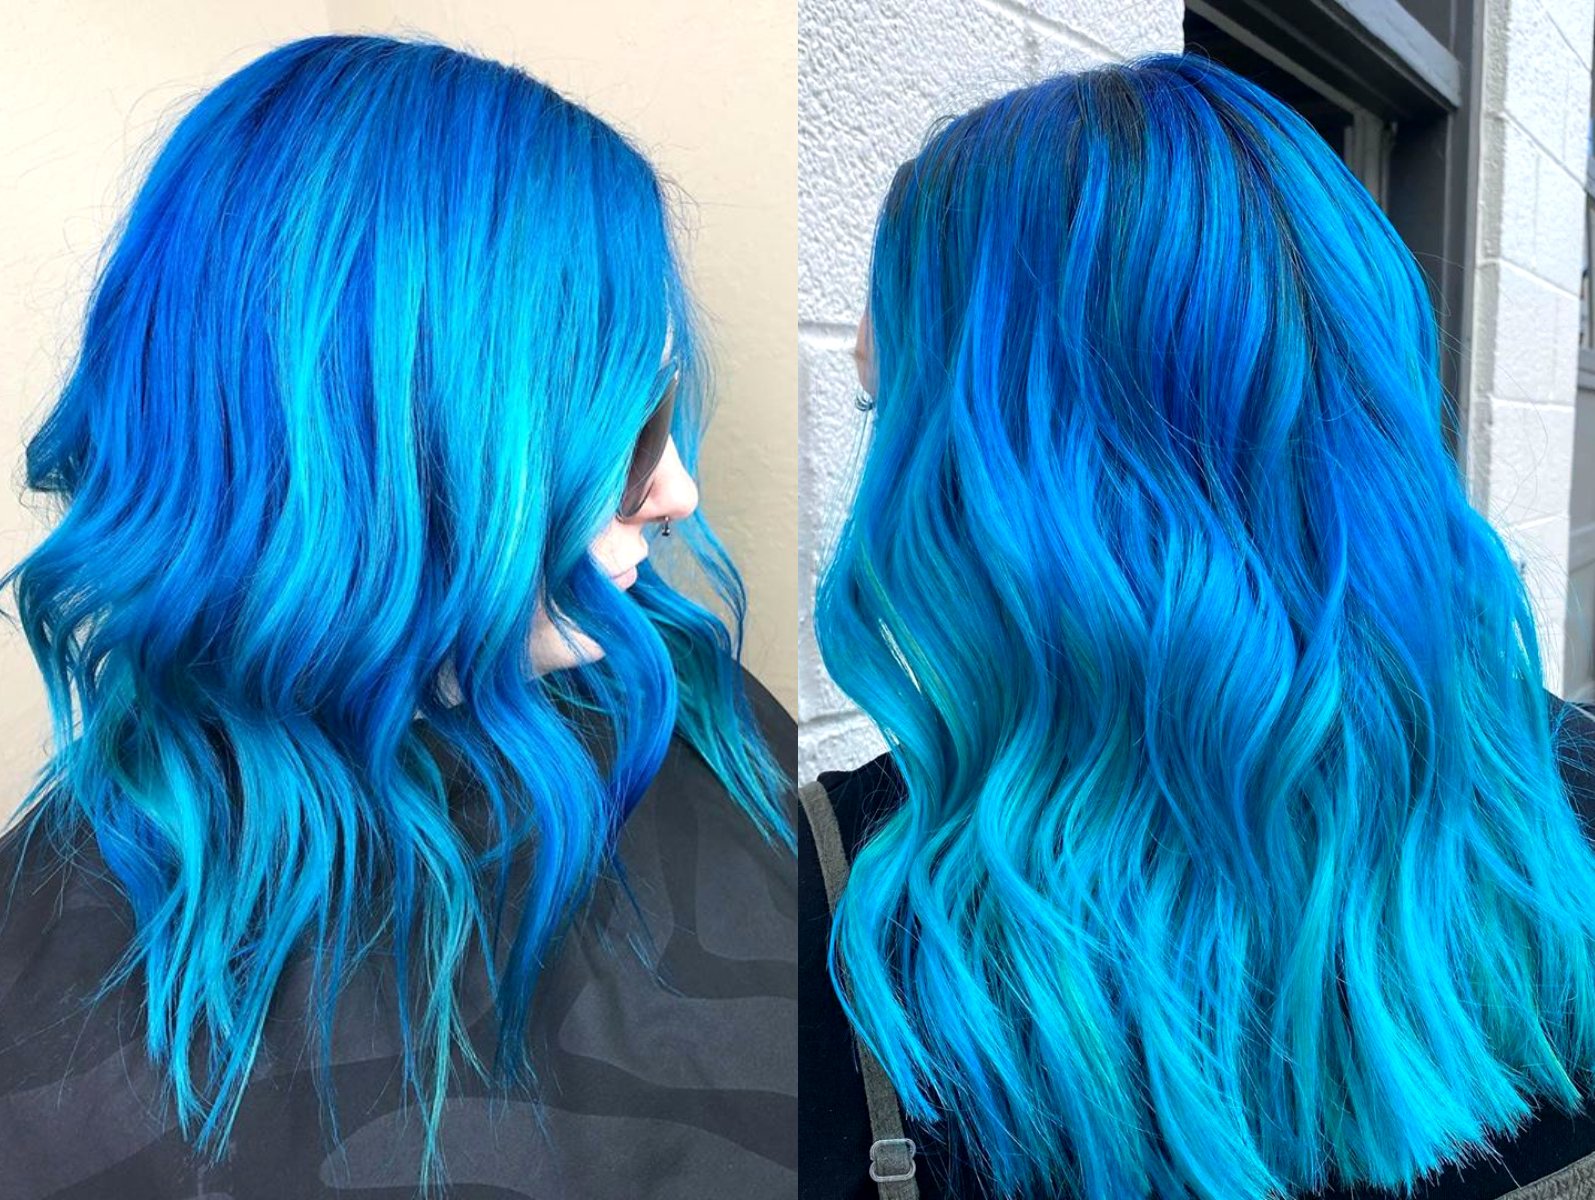 2. 20 Dark Blue Balayage Hair Ideas to Try This Season - wide 10